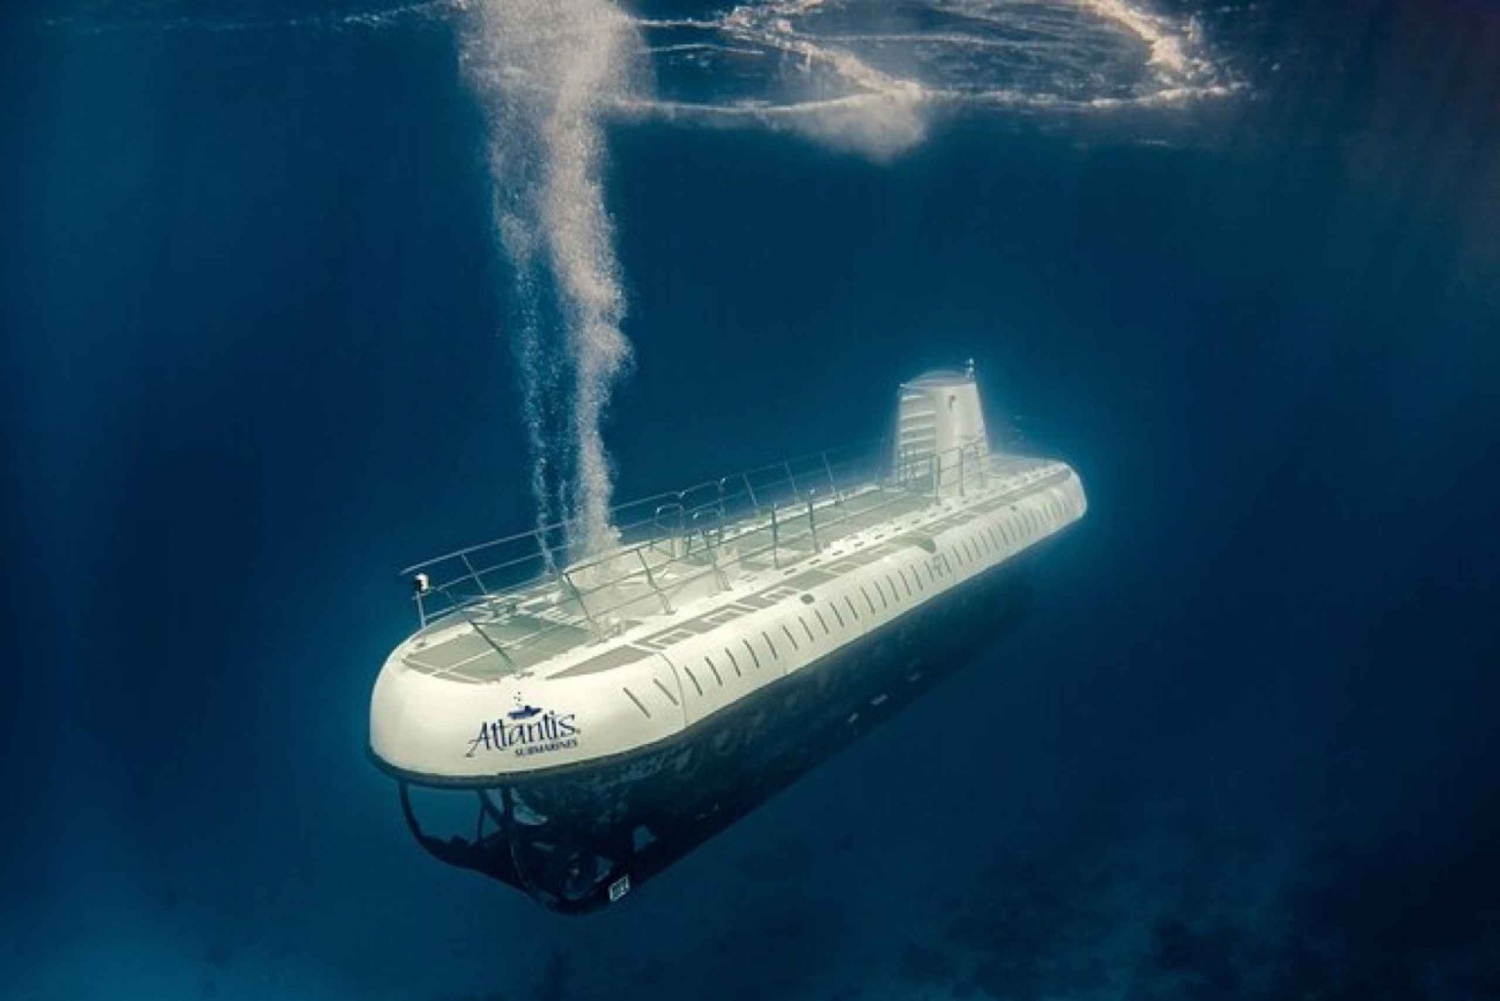 Atlantis Submarine Expedition in Cozumel